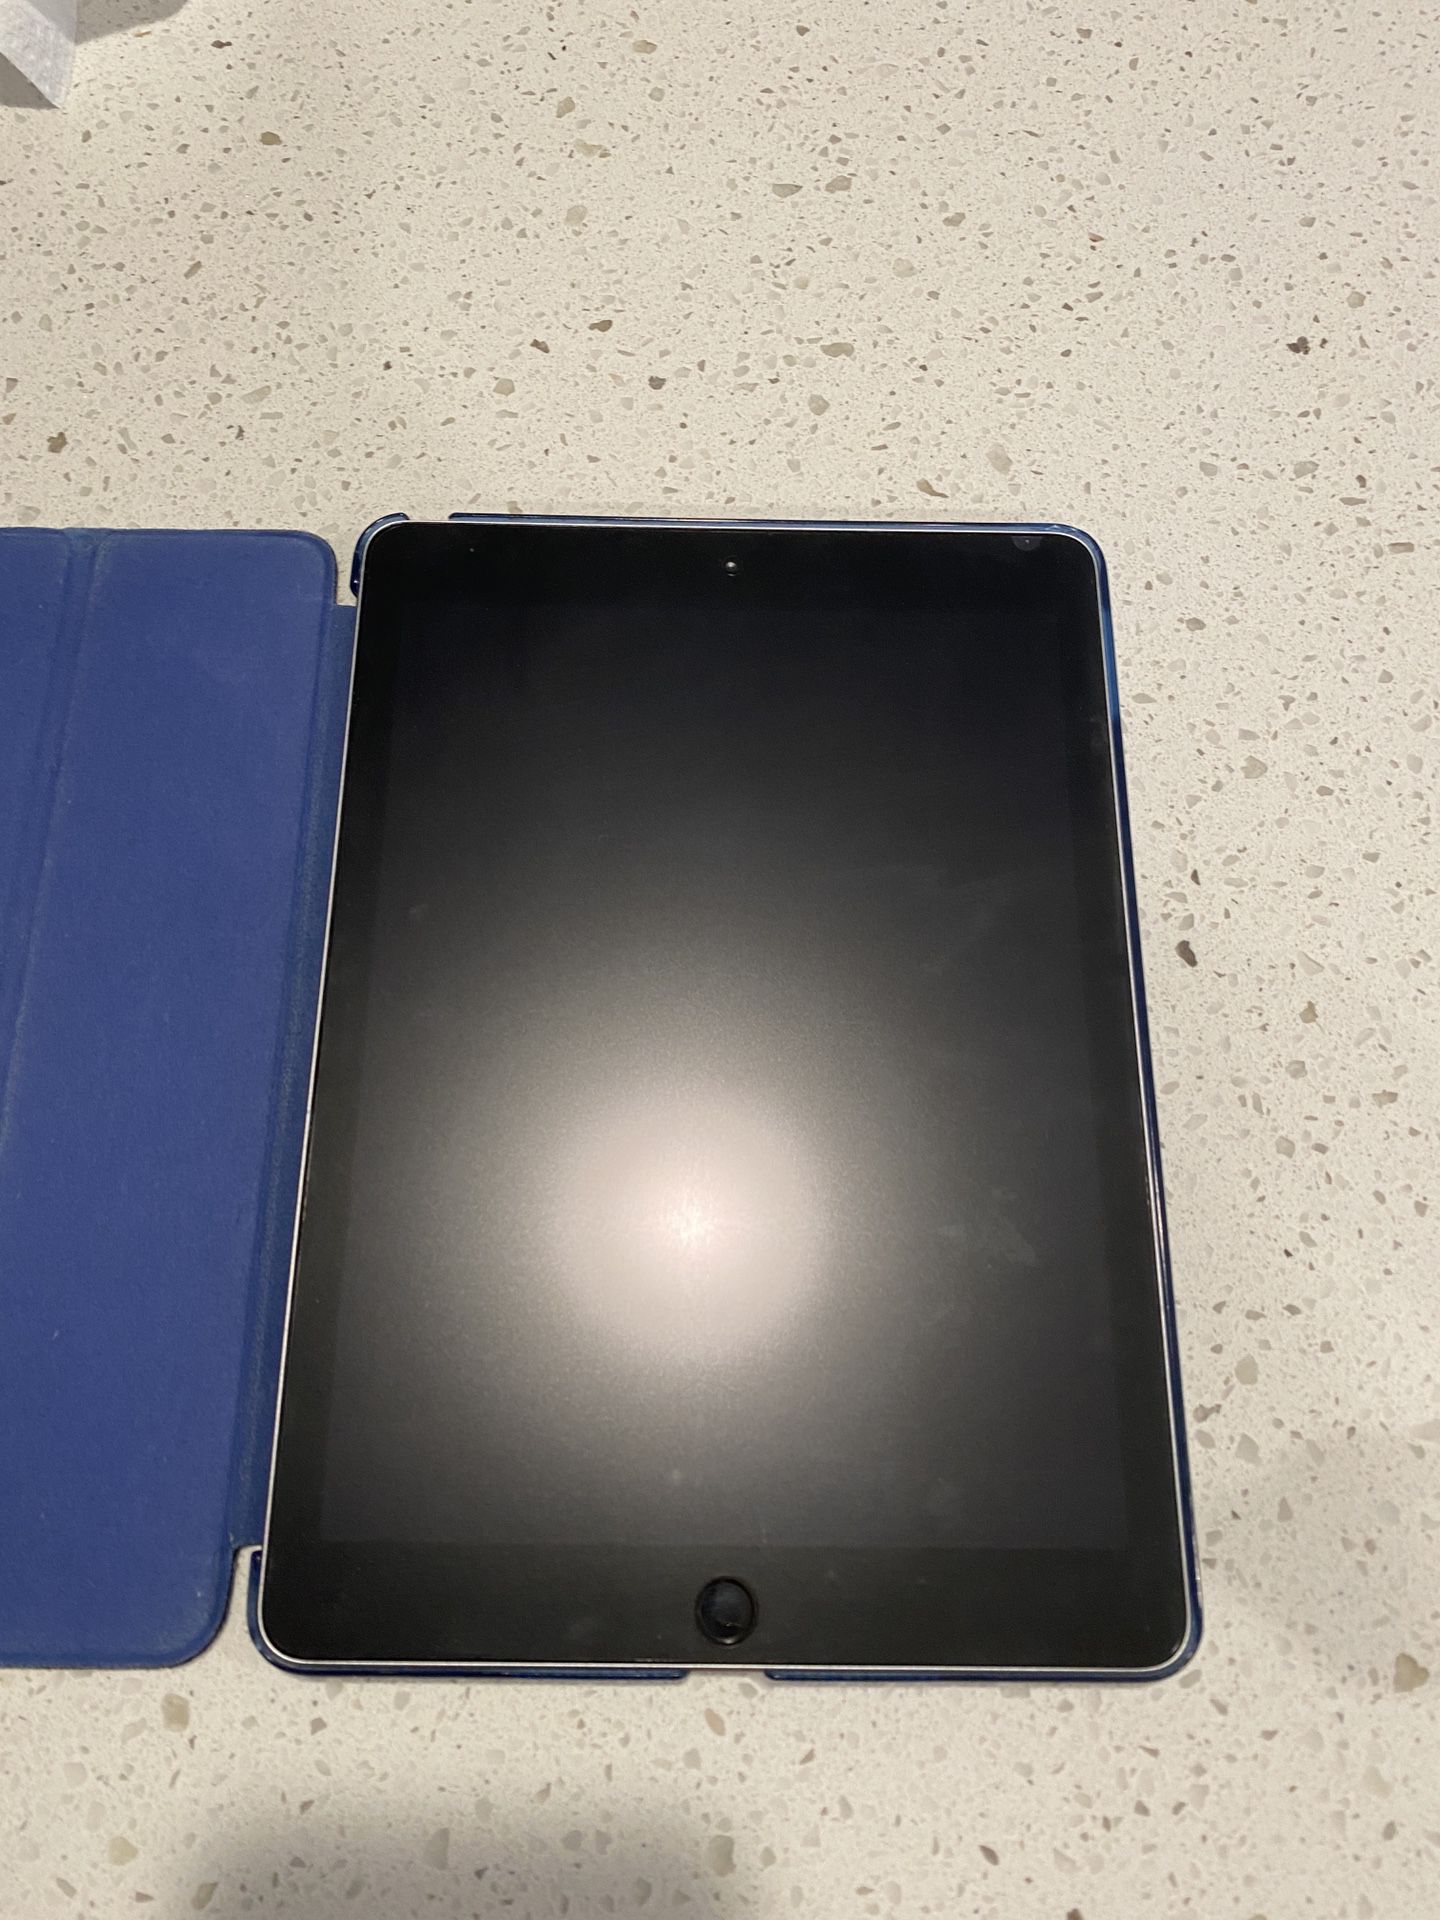 iPad 6 (2018) and Apple Pencil 1